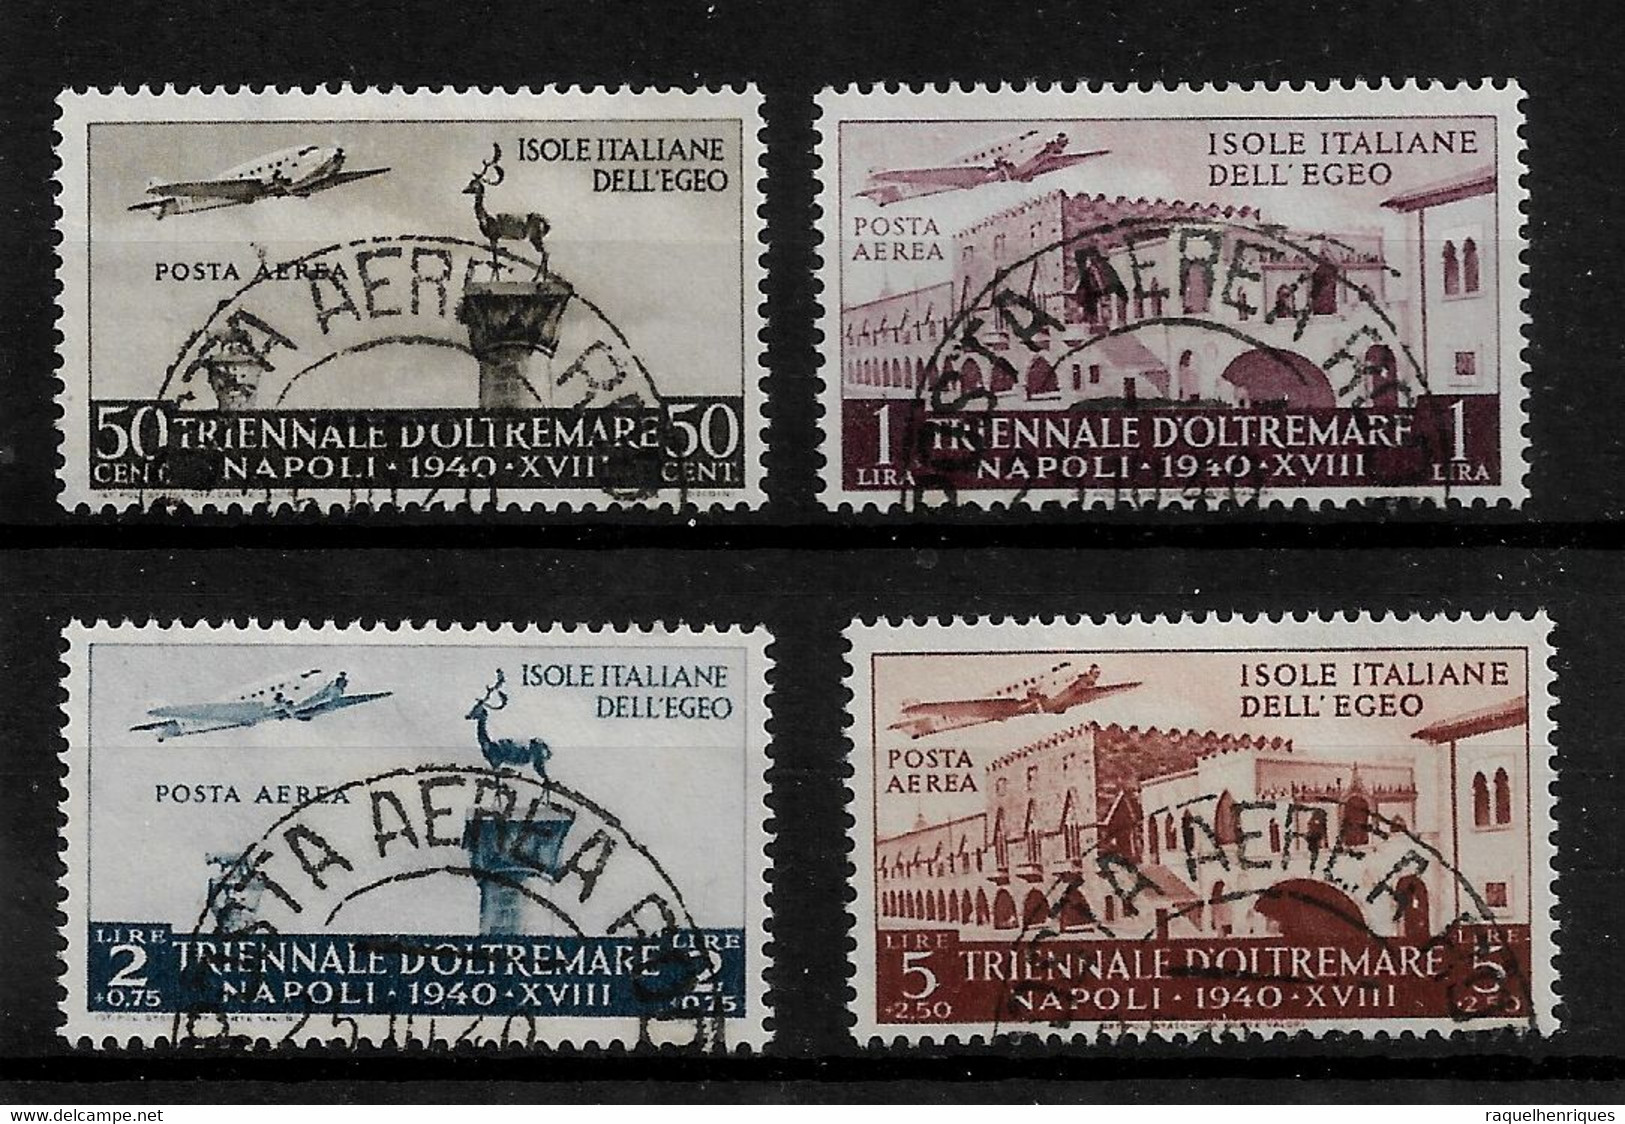 ITALY STAMP - AEGEAN ISLANDS - 1940 Airmail - Exhibition In Napoli SET USED (BA5#88) - Ägäis (Aut. Reg.)